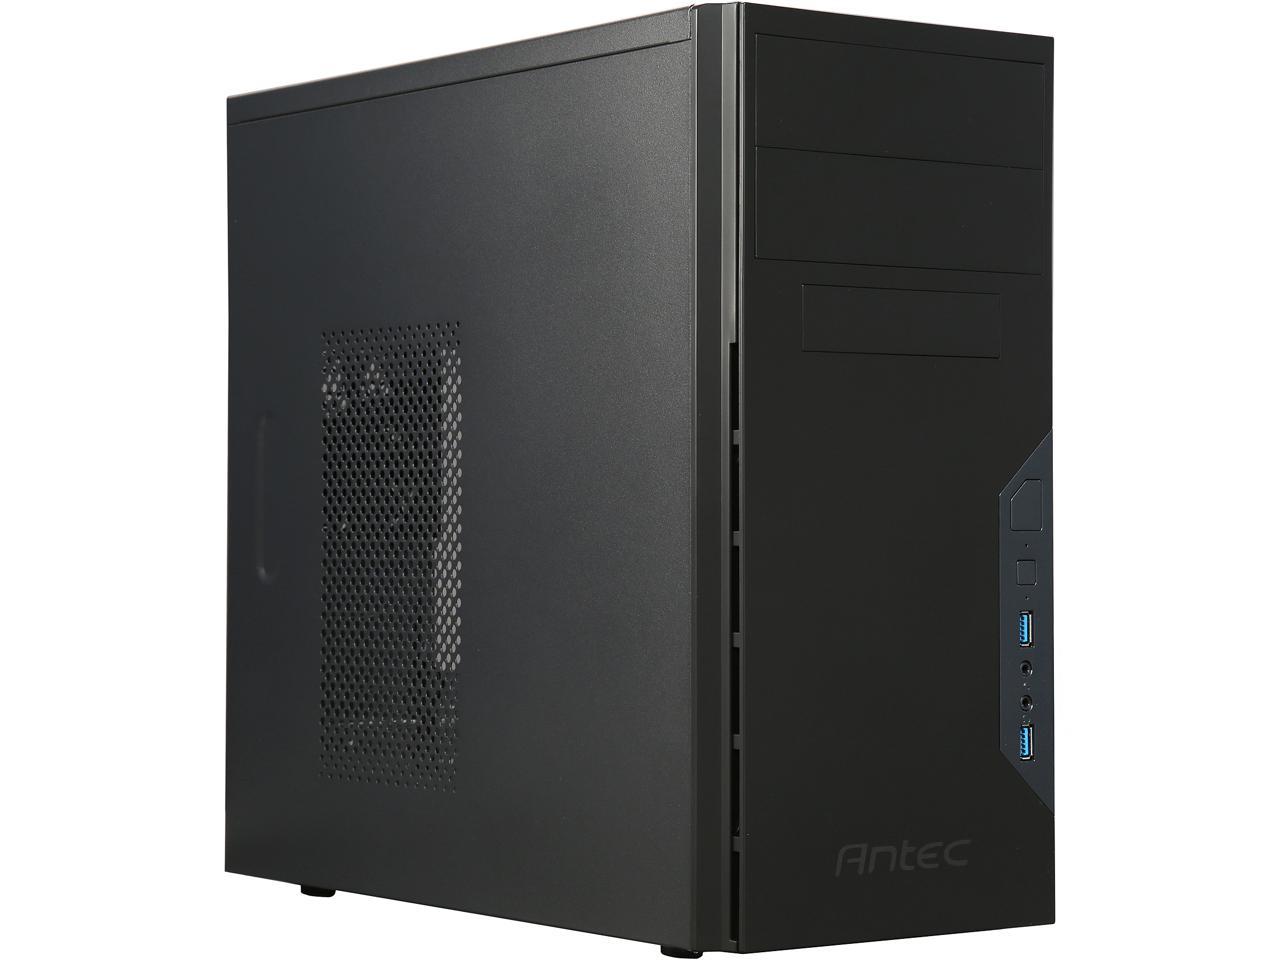 U2 CASE PER PC BLACK Antec ANTEC CABINET VSK 3000B-U3 